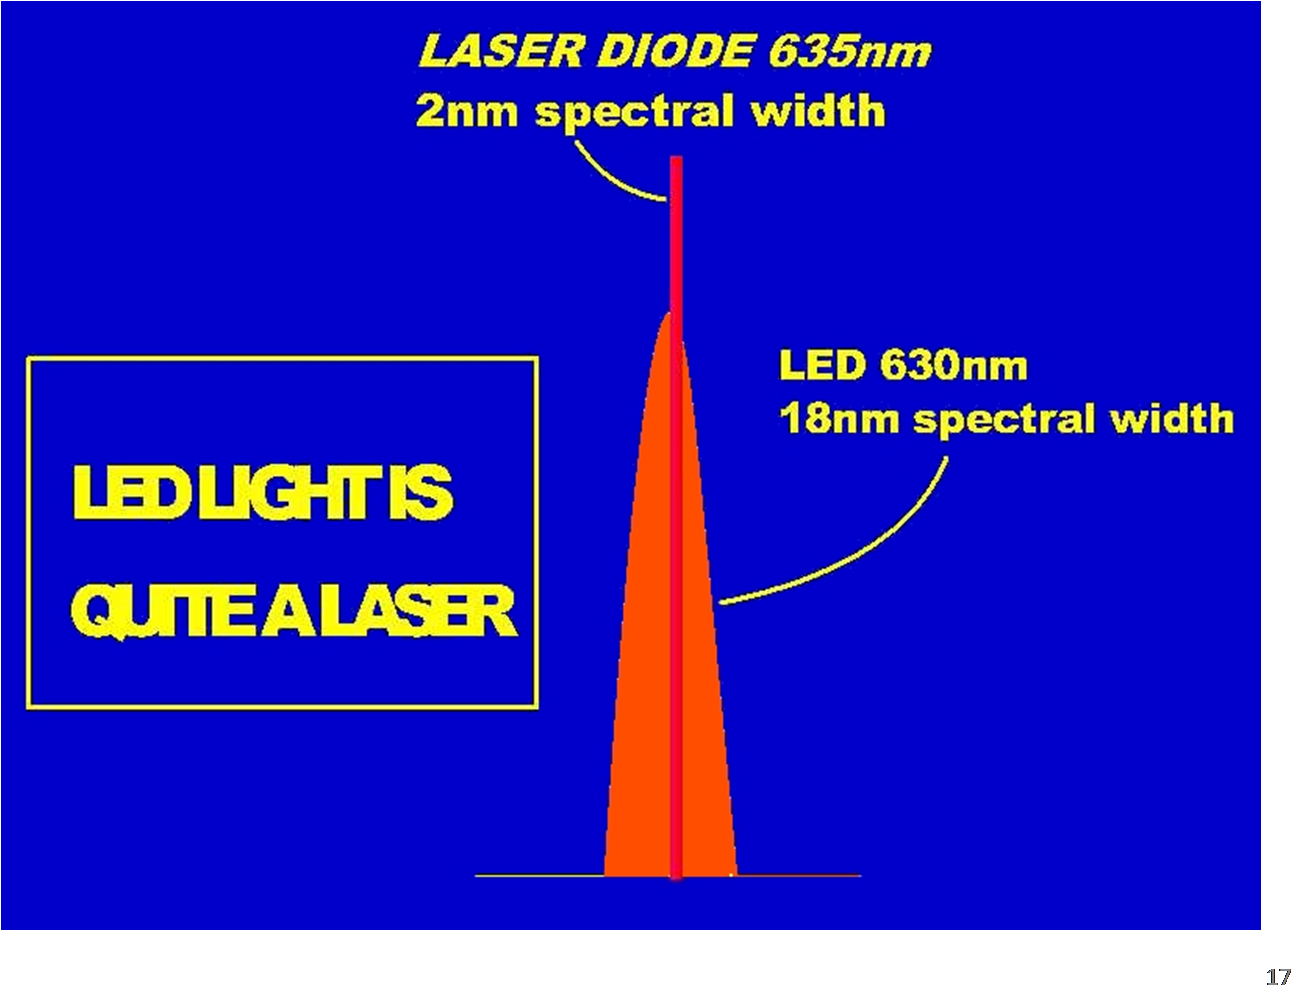 Emission lumineuse efficace cellulaire en PBM : Cohérence ou pas cohérence ?   Lars Hode (Swedish medical laser society)